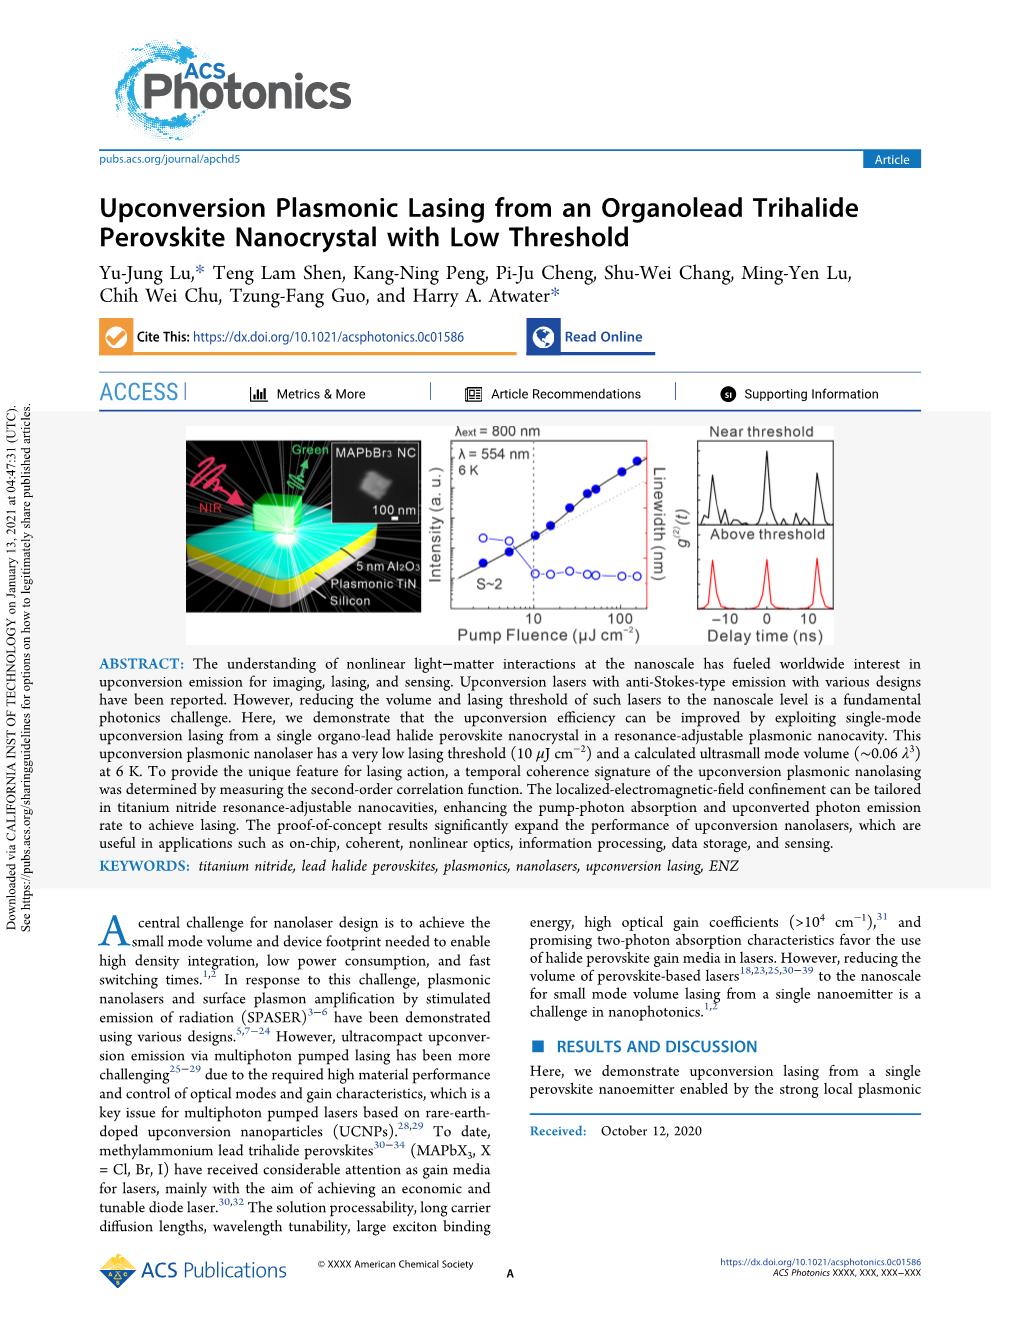 Upconversion Plasmonic Lasing from an Organolead Trihalide Perovskite Nanocrystal with Low Threshold